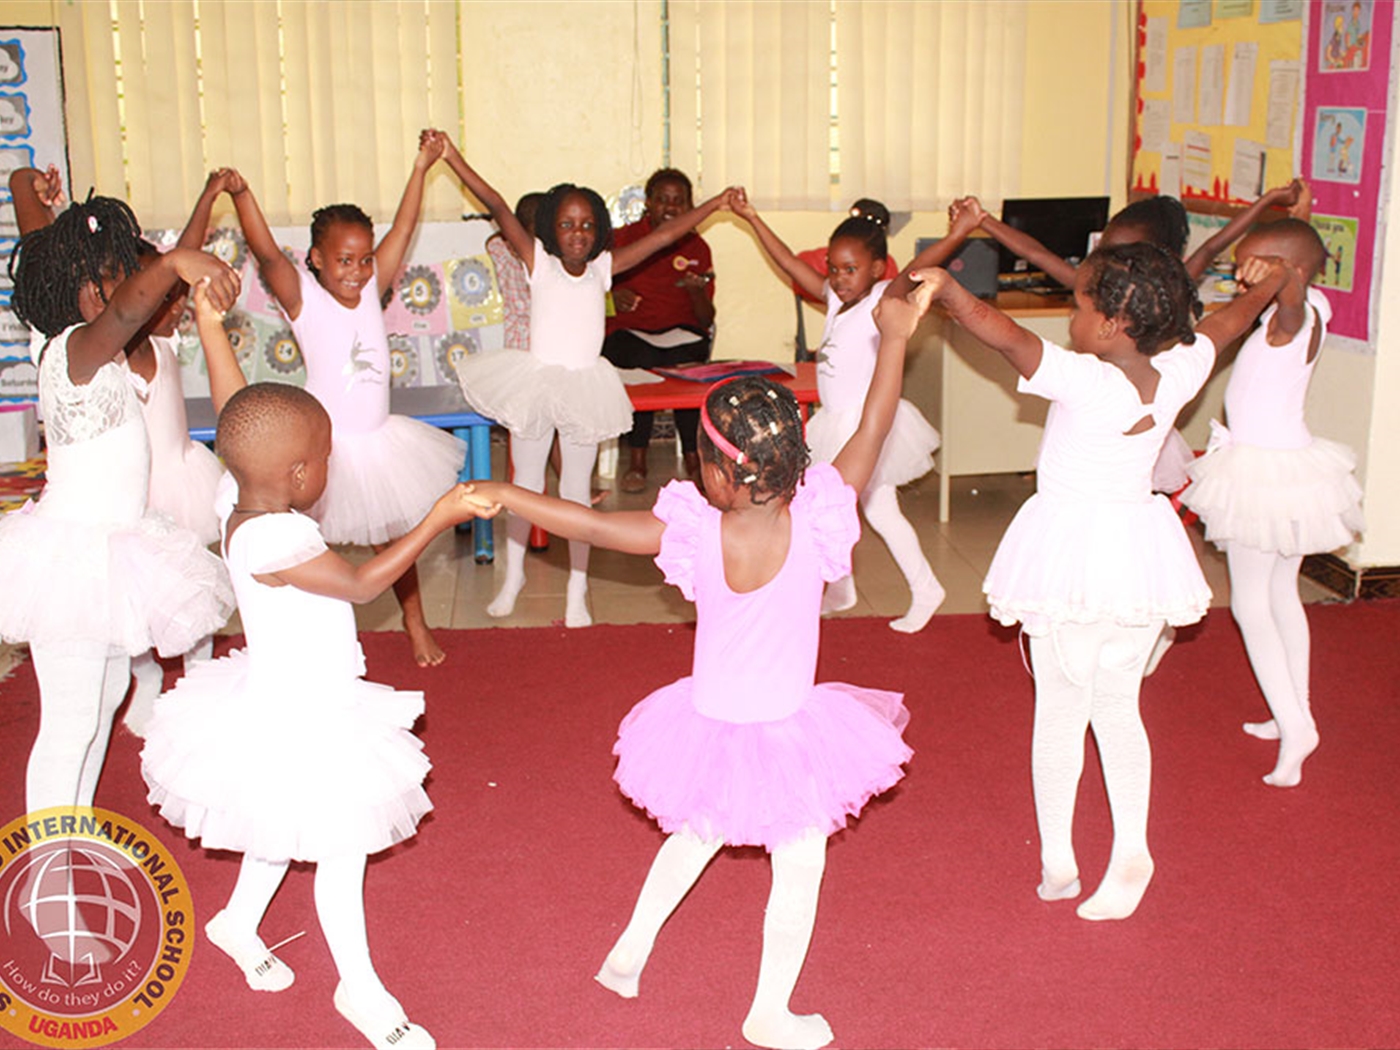 Ballet Lessons at the school premises